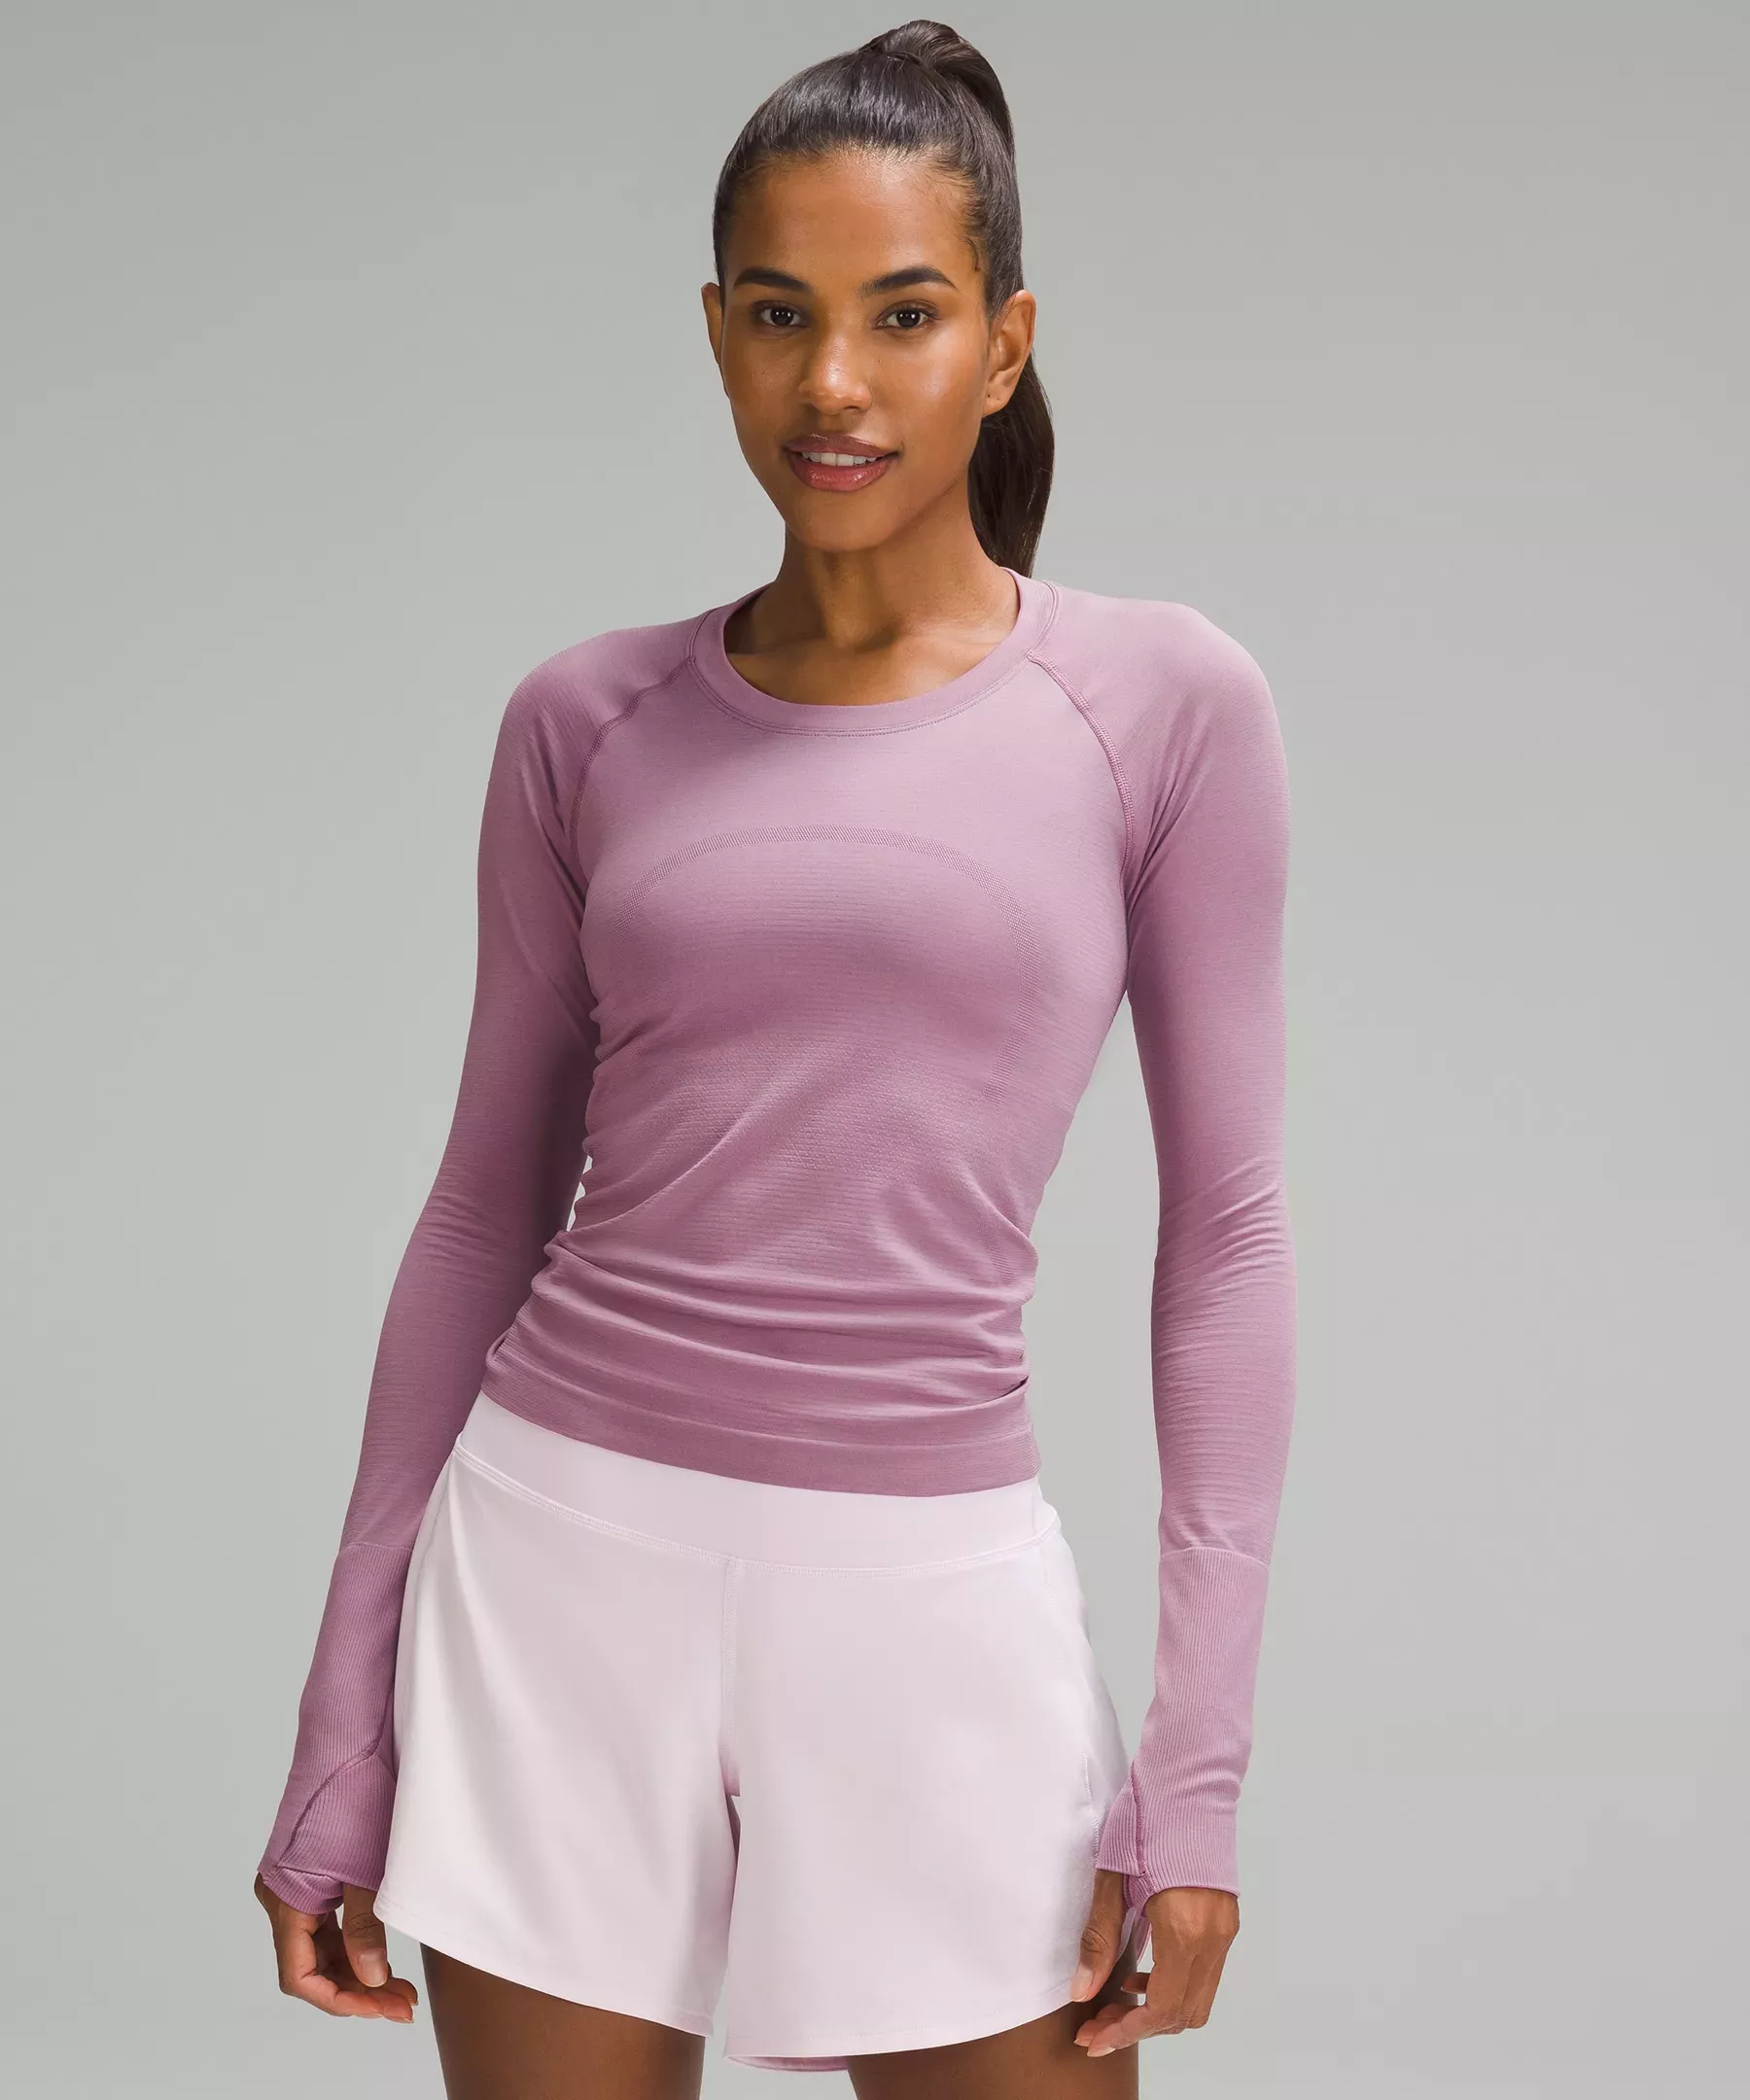 Lululemon Swiftly Tech Short-Sleeve Shirt 2.0 - Purple Ash